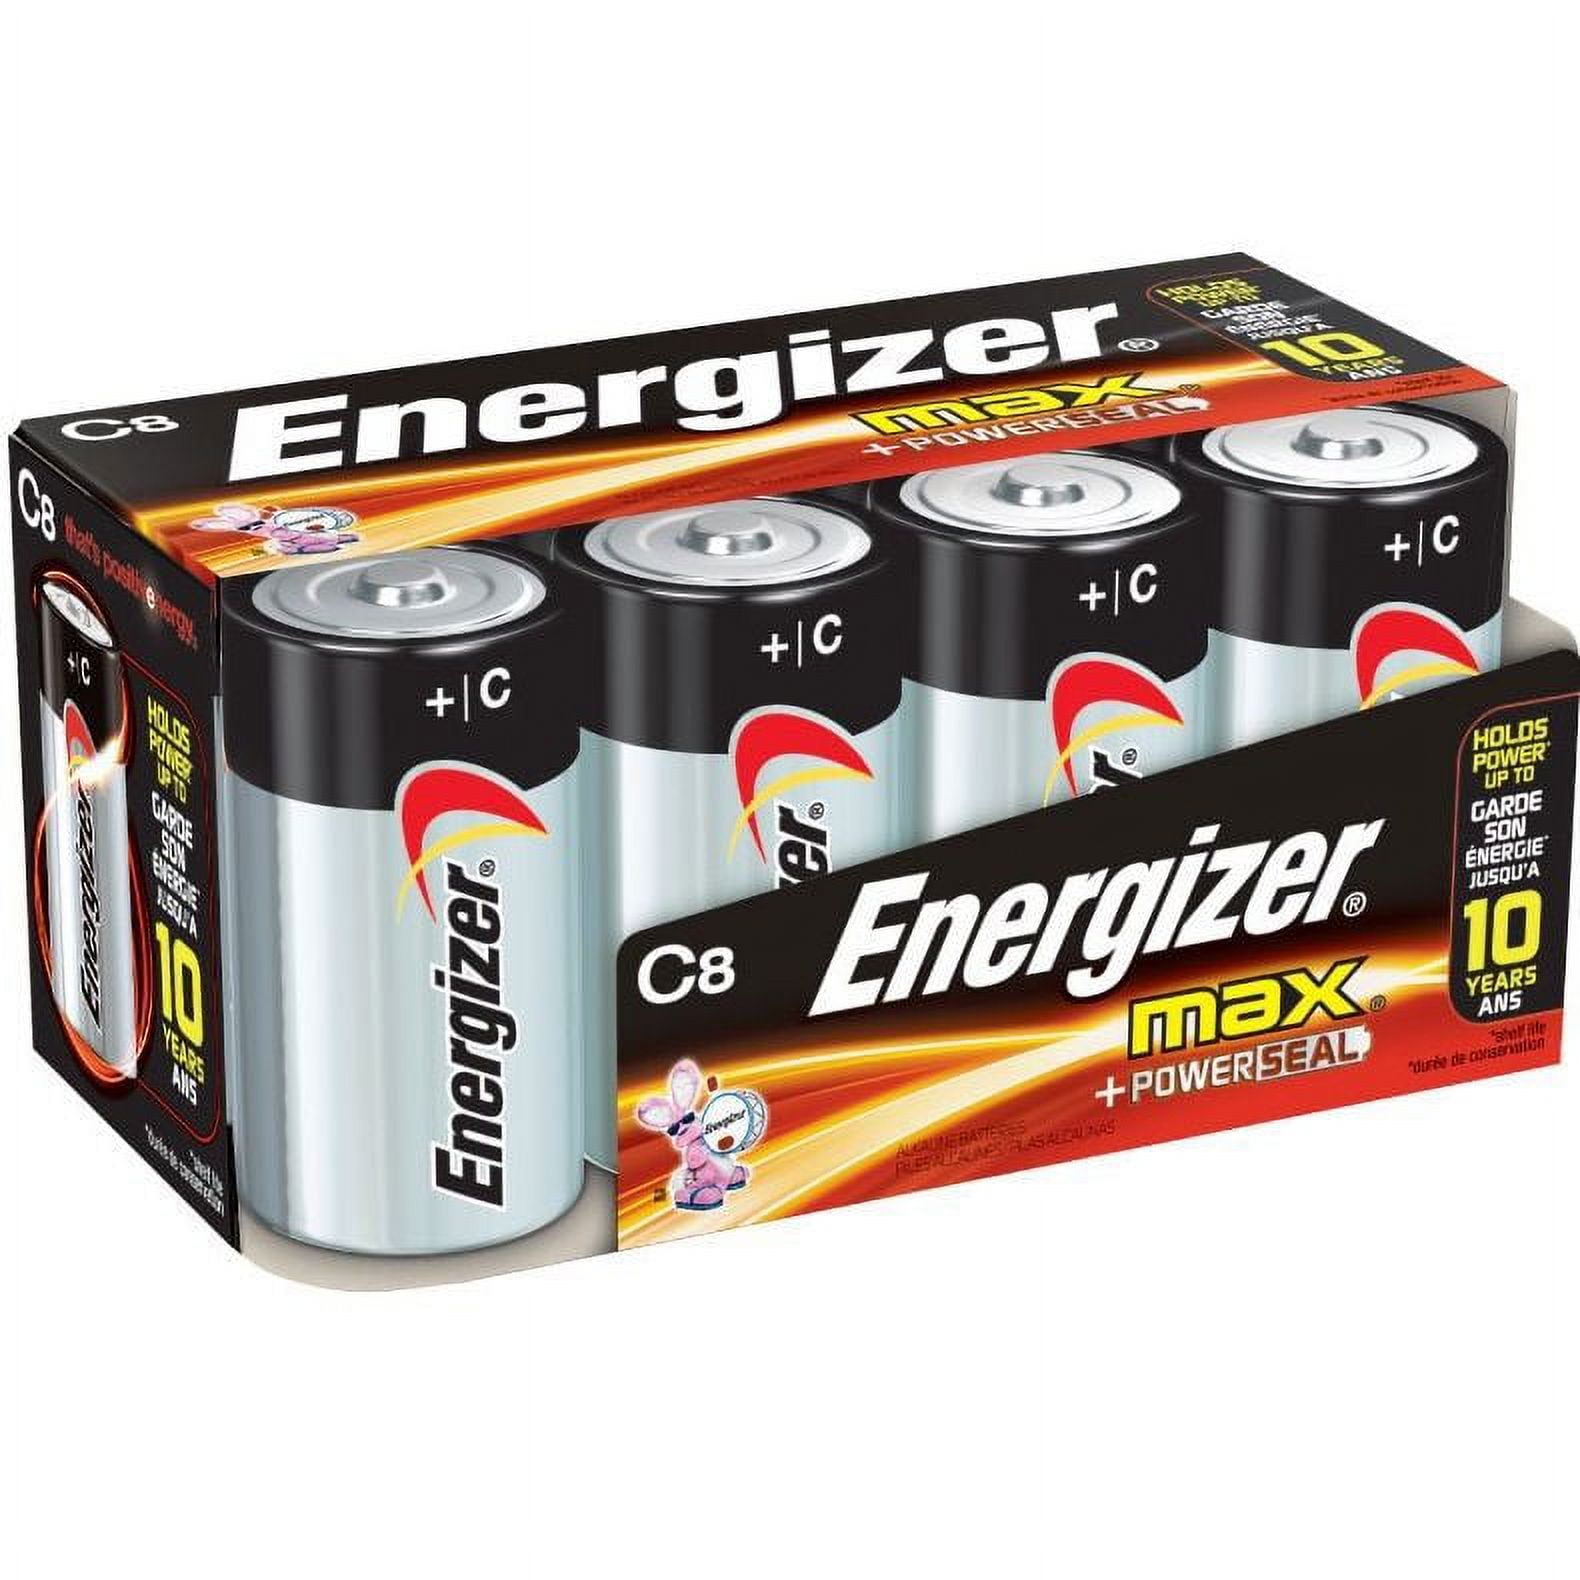 C batteries. Батарейки Energizer Max. Батарейки Energizer e301535201. Батарейки Energizer e301156201. Energizer Max lr14 емкость.